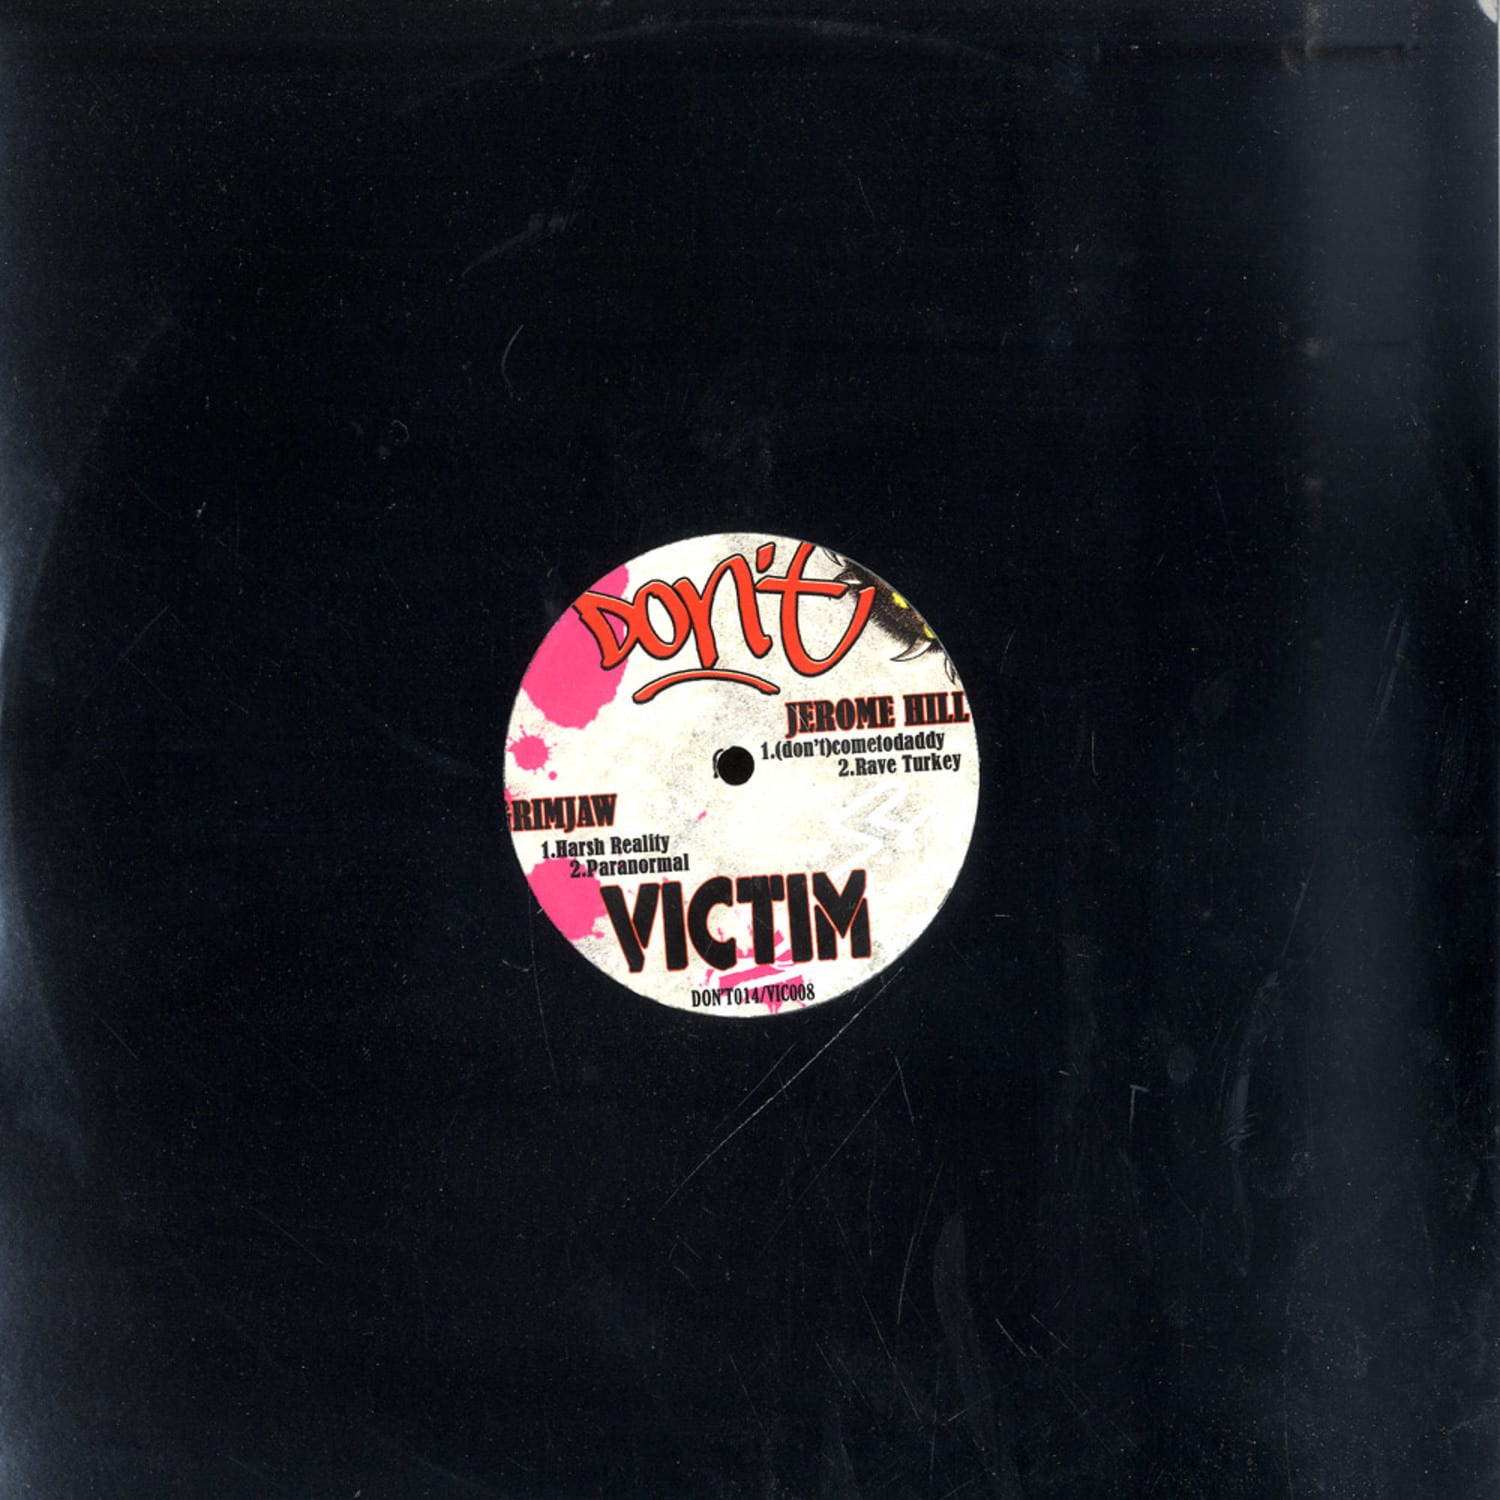 Jerome Hill / Grimjaw - VICTIM SPLIT EP